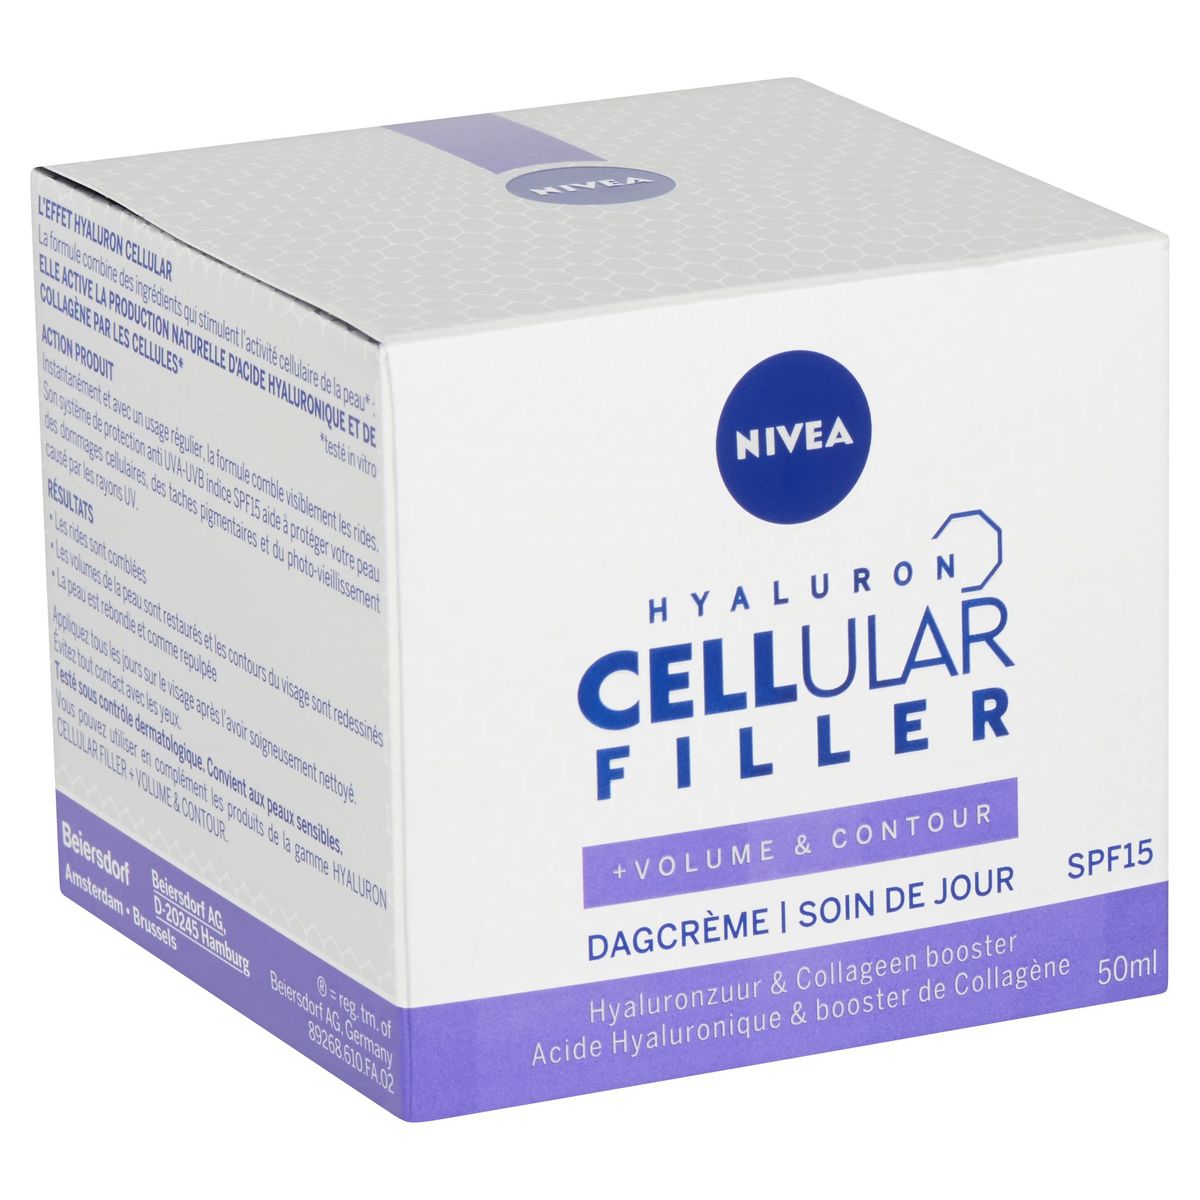 Nivea Hyaluron Cellular Filler + Volume & Contour Soin Jour SPF15 50ml